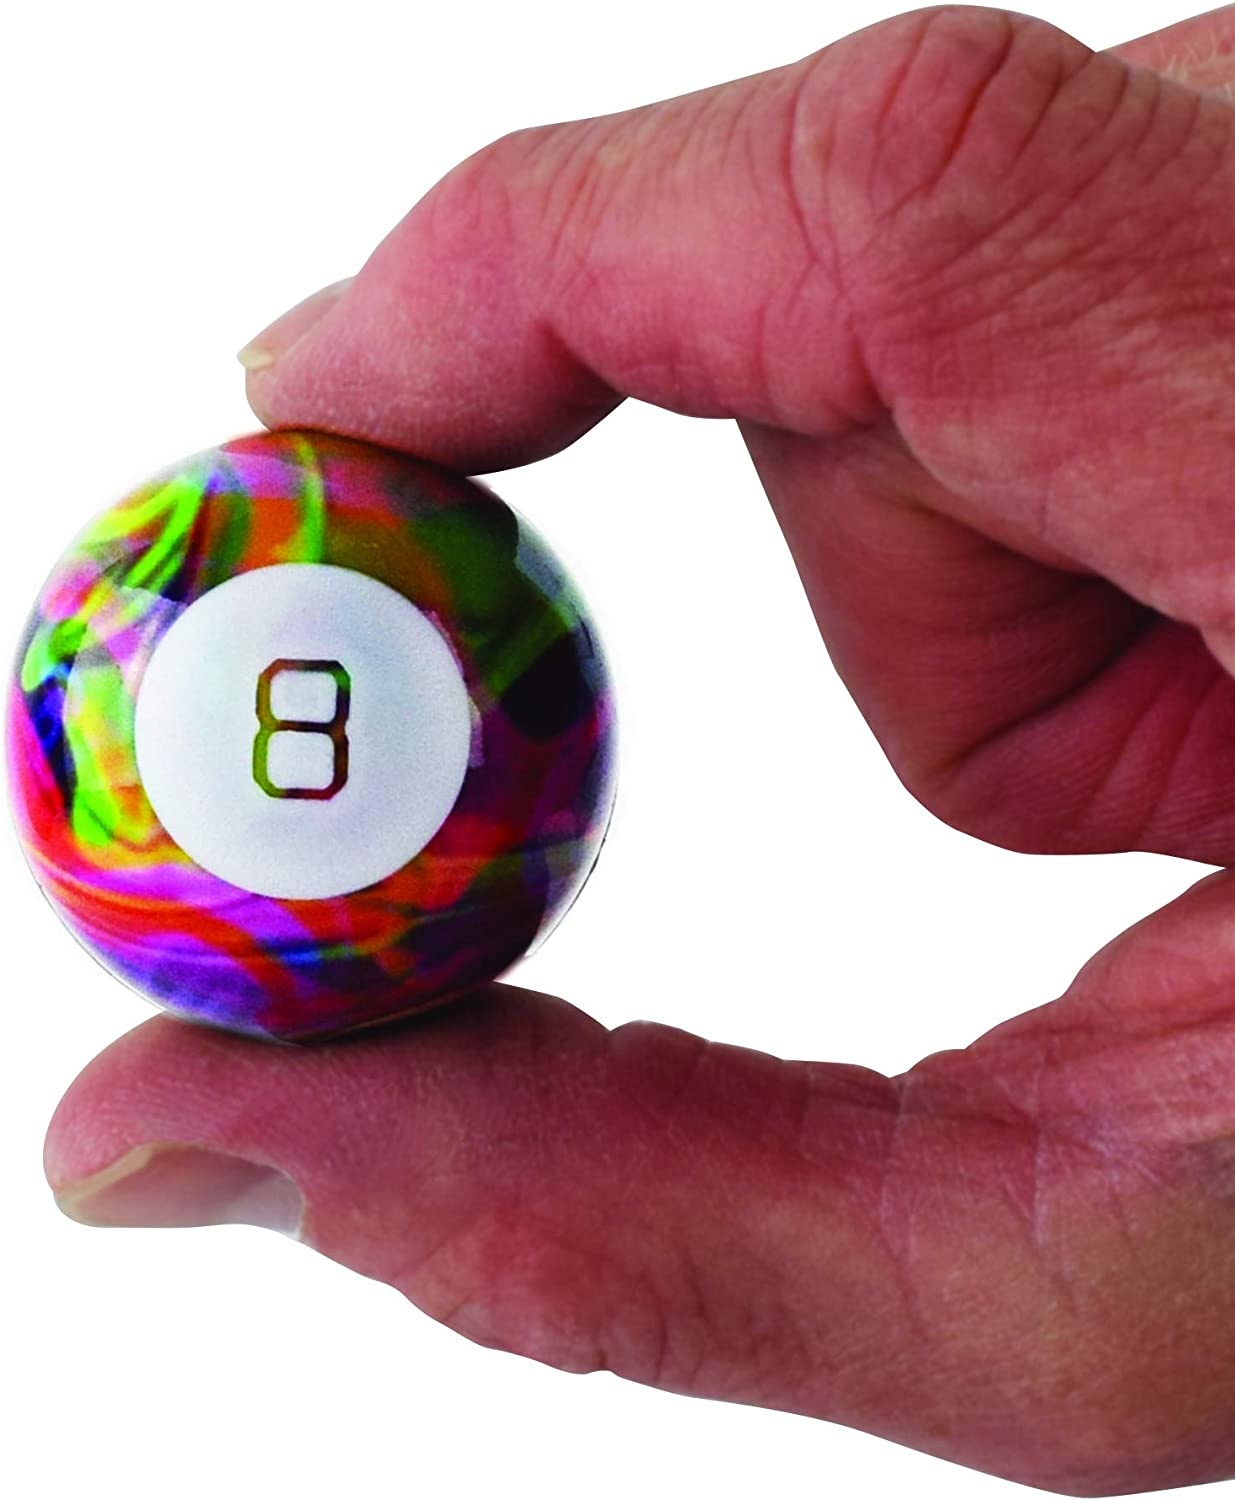 World's most advanced digital Magic 8 Ball toy 